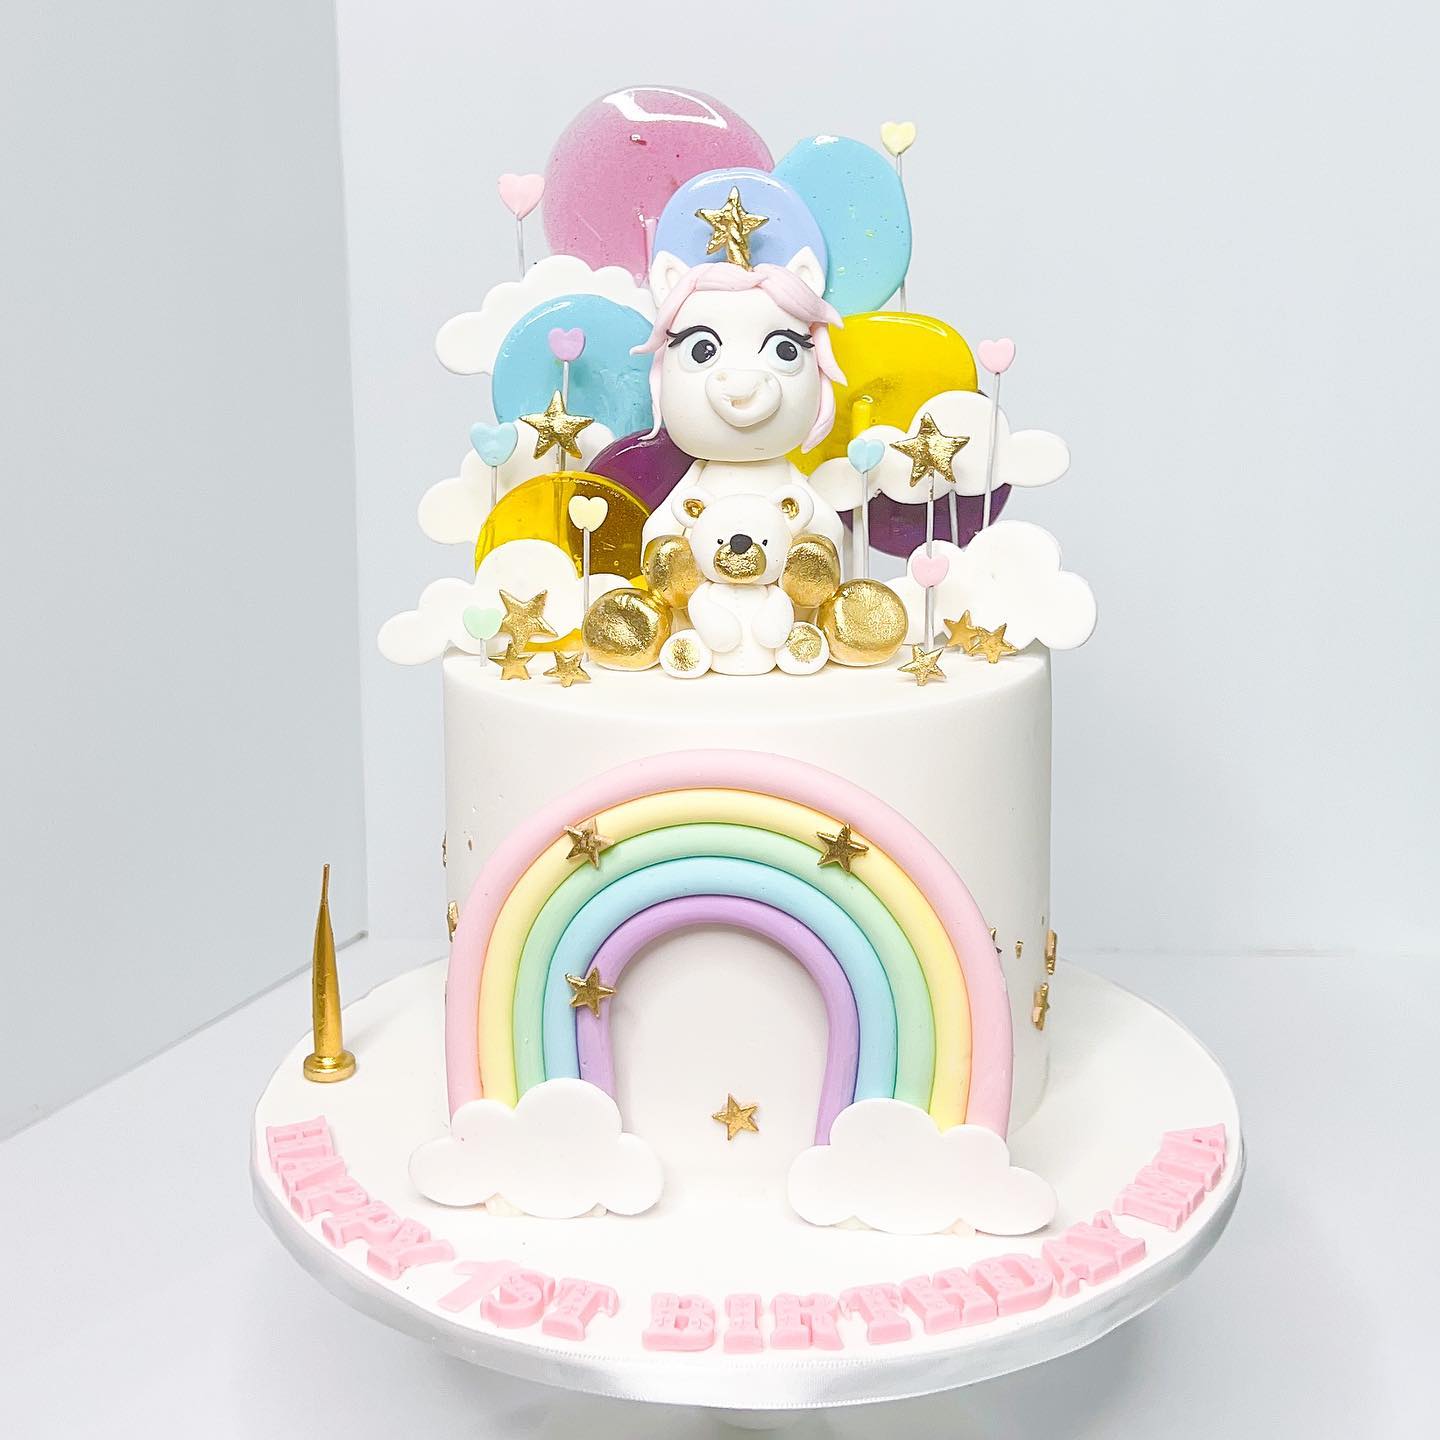 Easy Unicorn Cake Tutorial With Free Unicorn Eye Printable! - YouTube